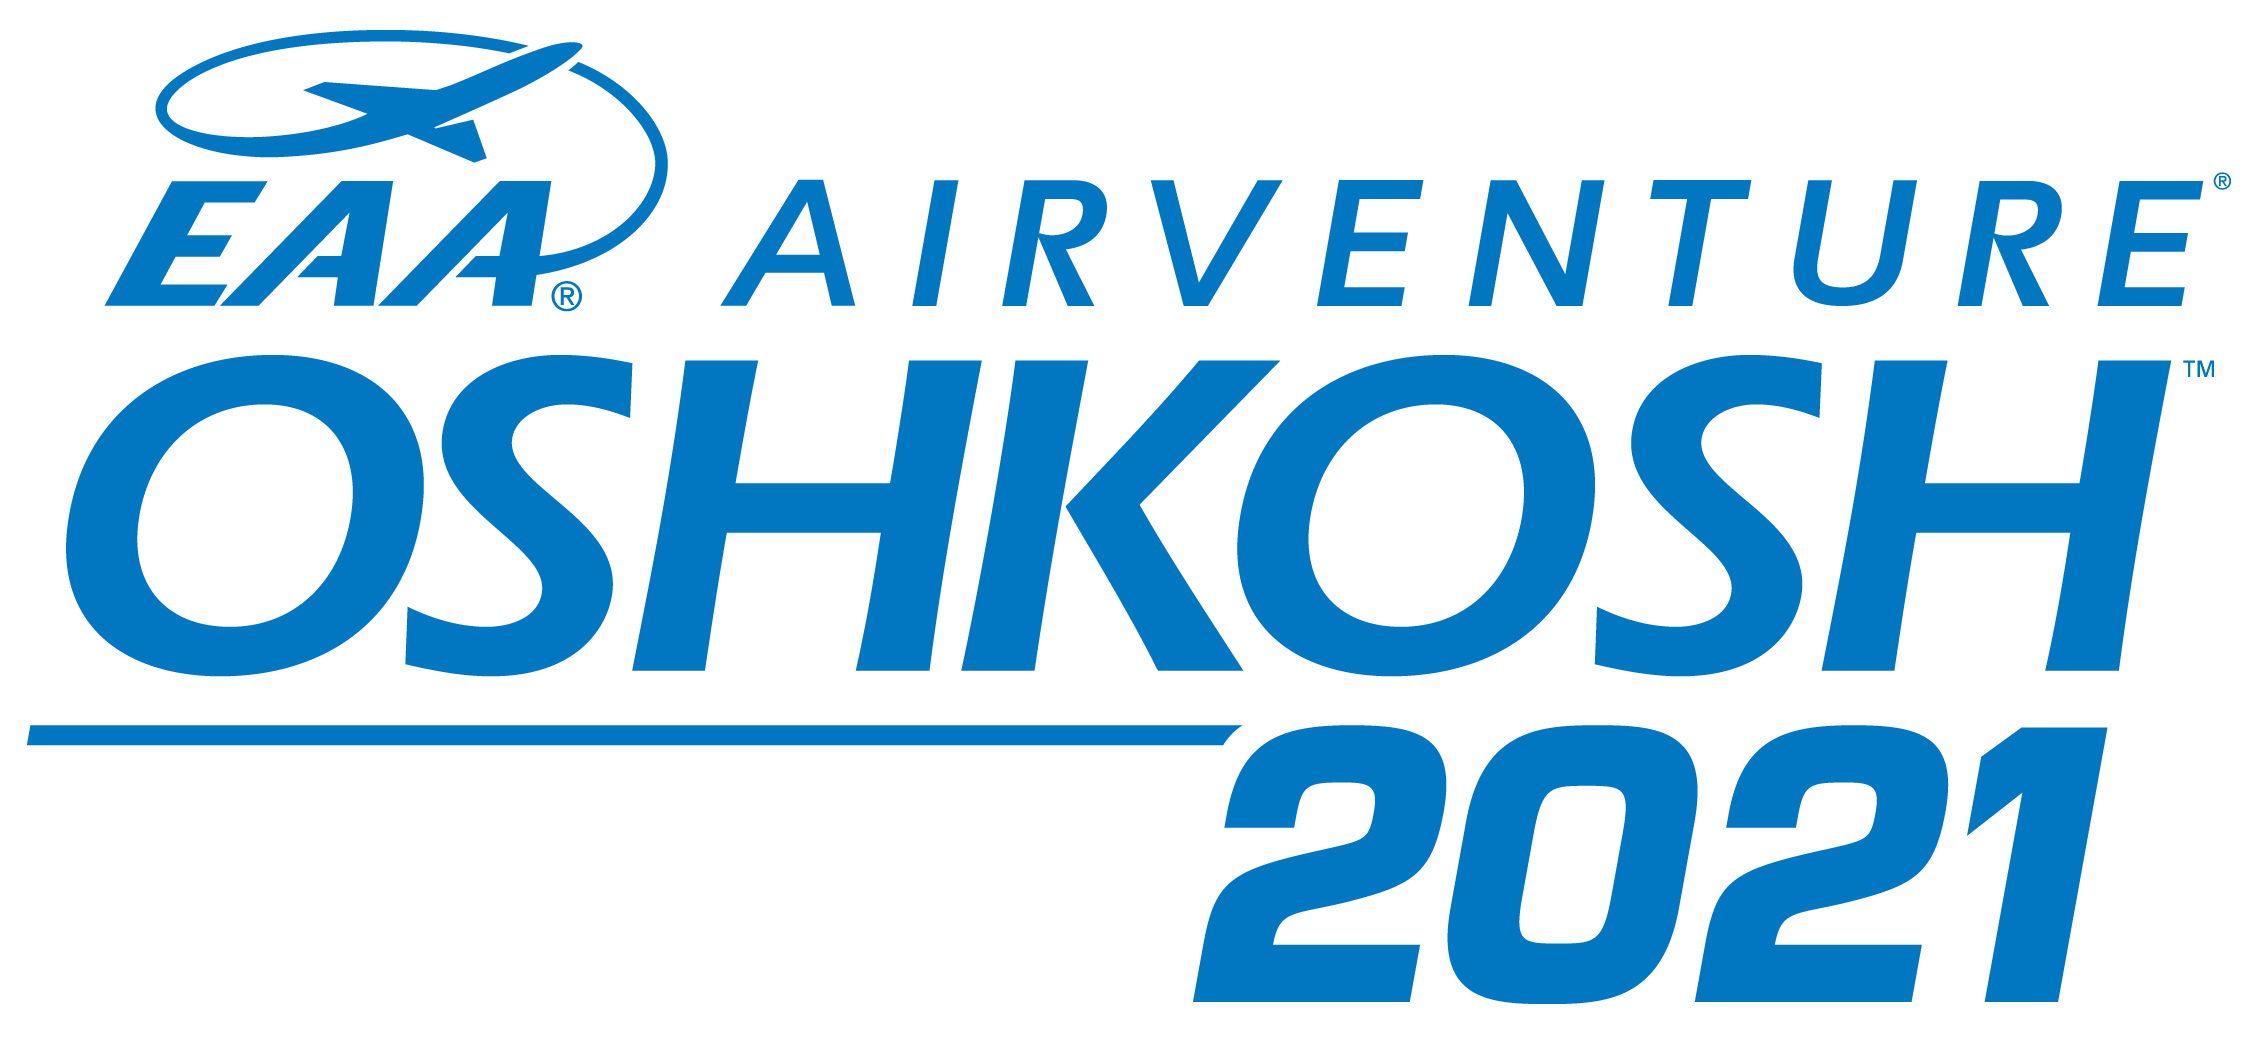 EAA Airventure Oshkosh 2021 